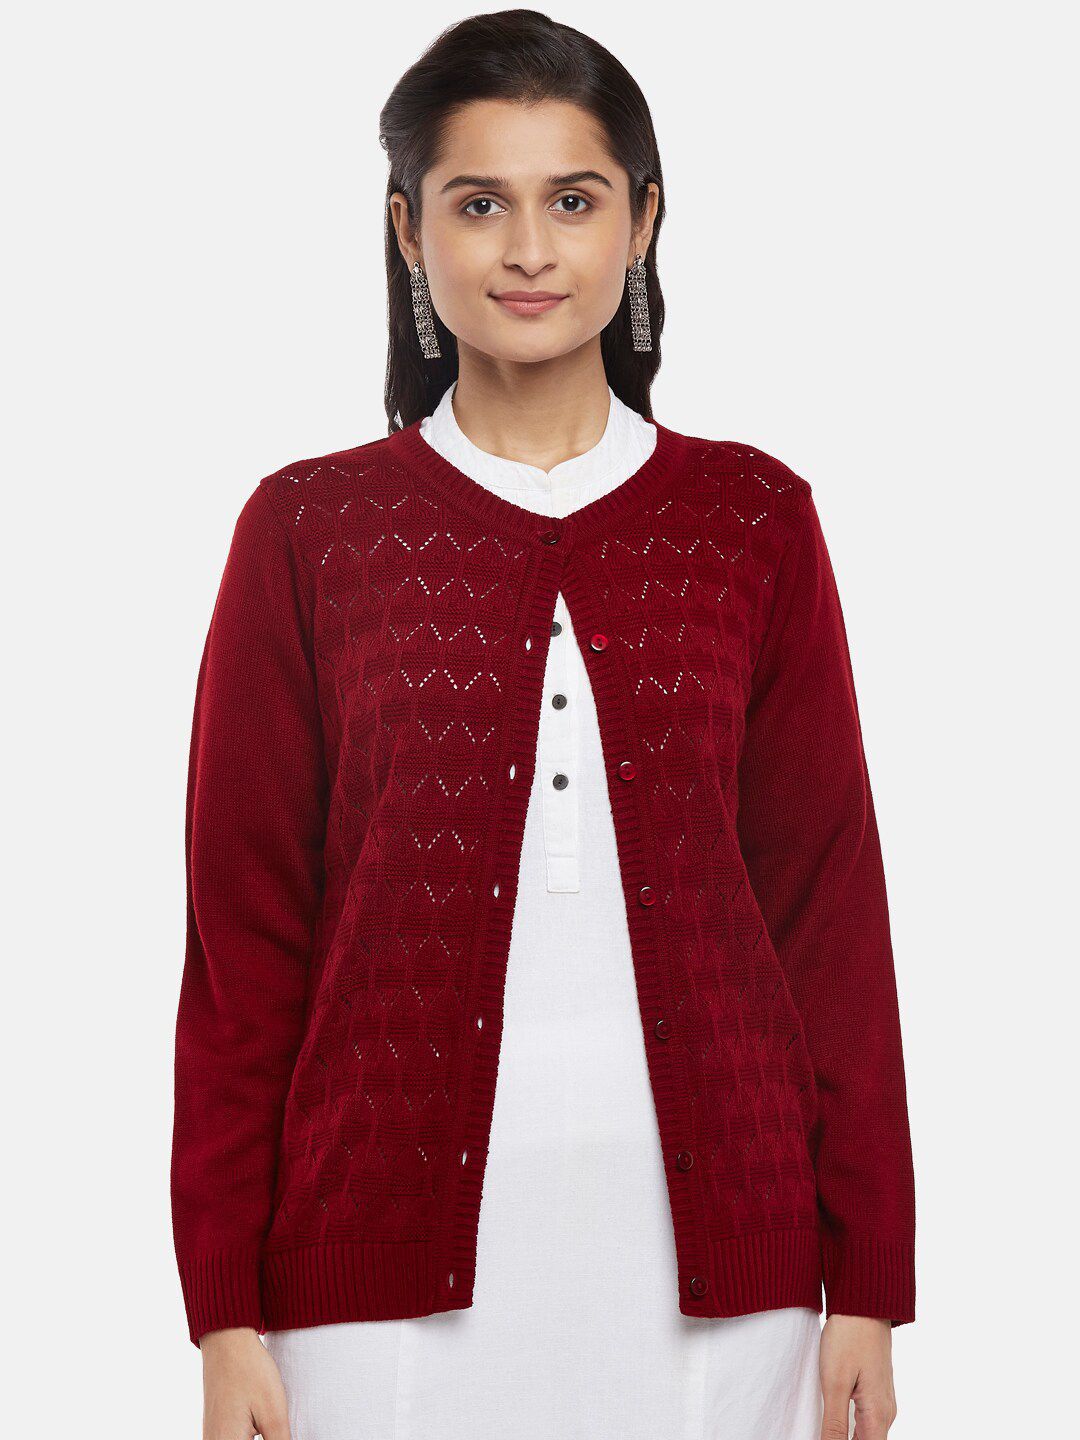 RANGMANCH BY PANTALOONS Women Red Self Design Cardigan Price in India